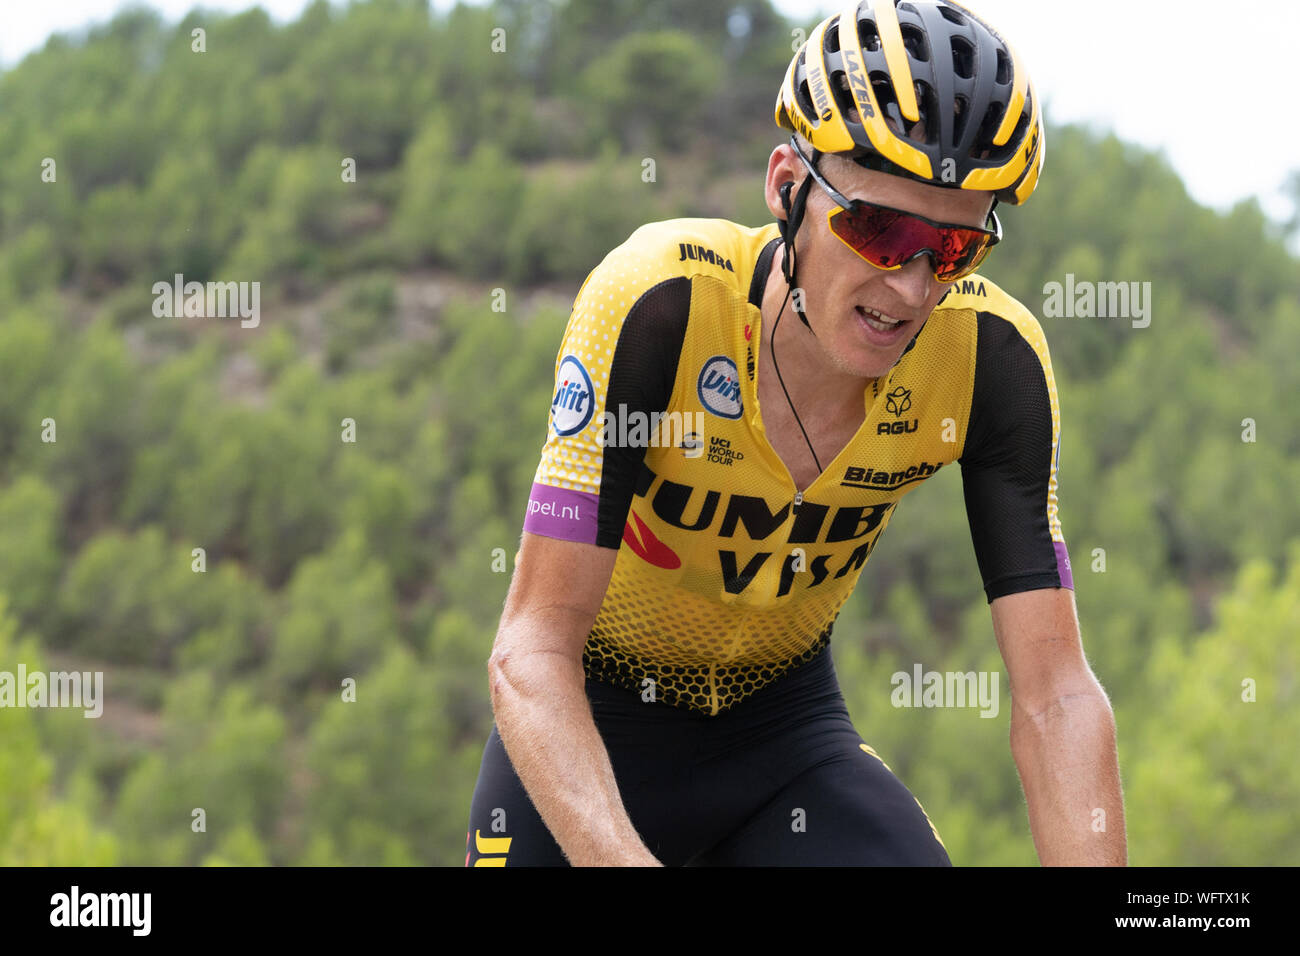 30 augustus 2019 Mas de la Costa, Espagne vélo Vuelta 2019 30-08-2019 : Ronde van Spanje : Onda : Mas de la Costa Robert Gesink, équipe Visma Jumbo Banque D'Images